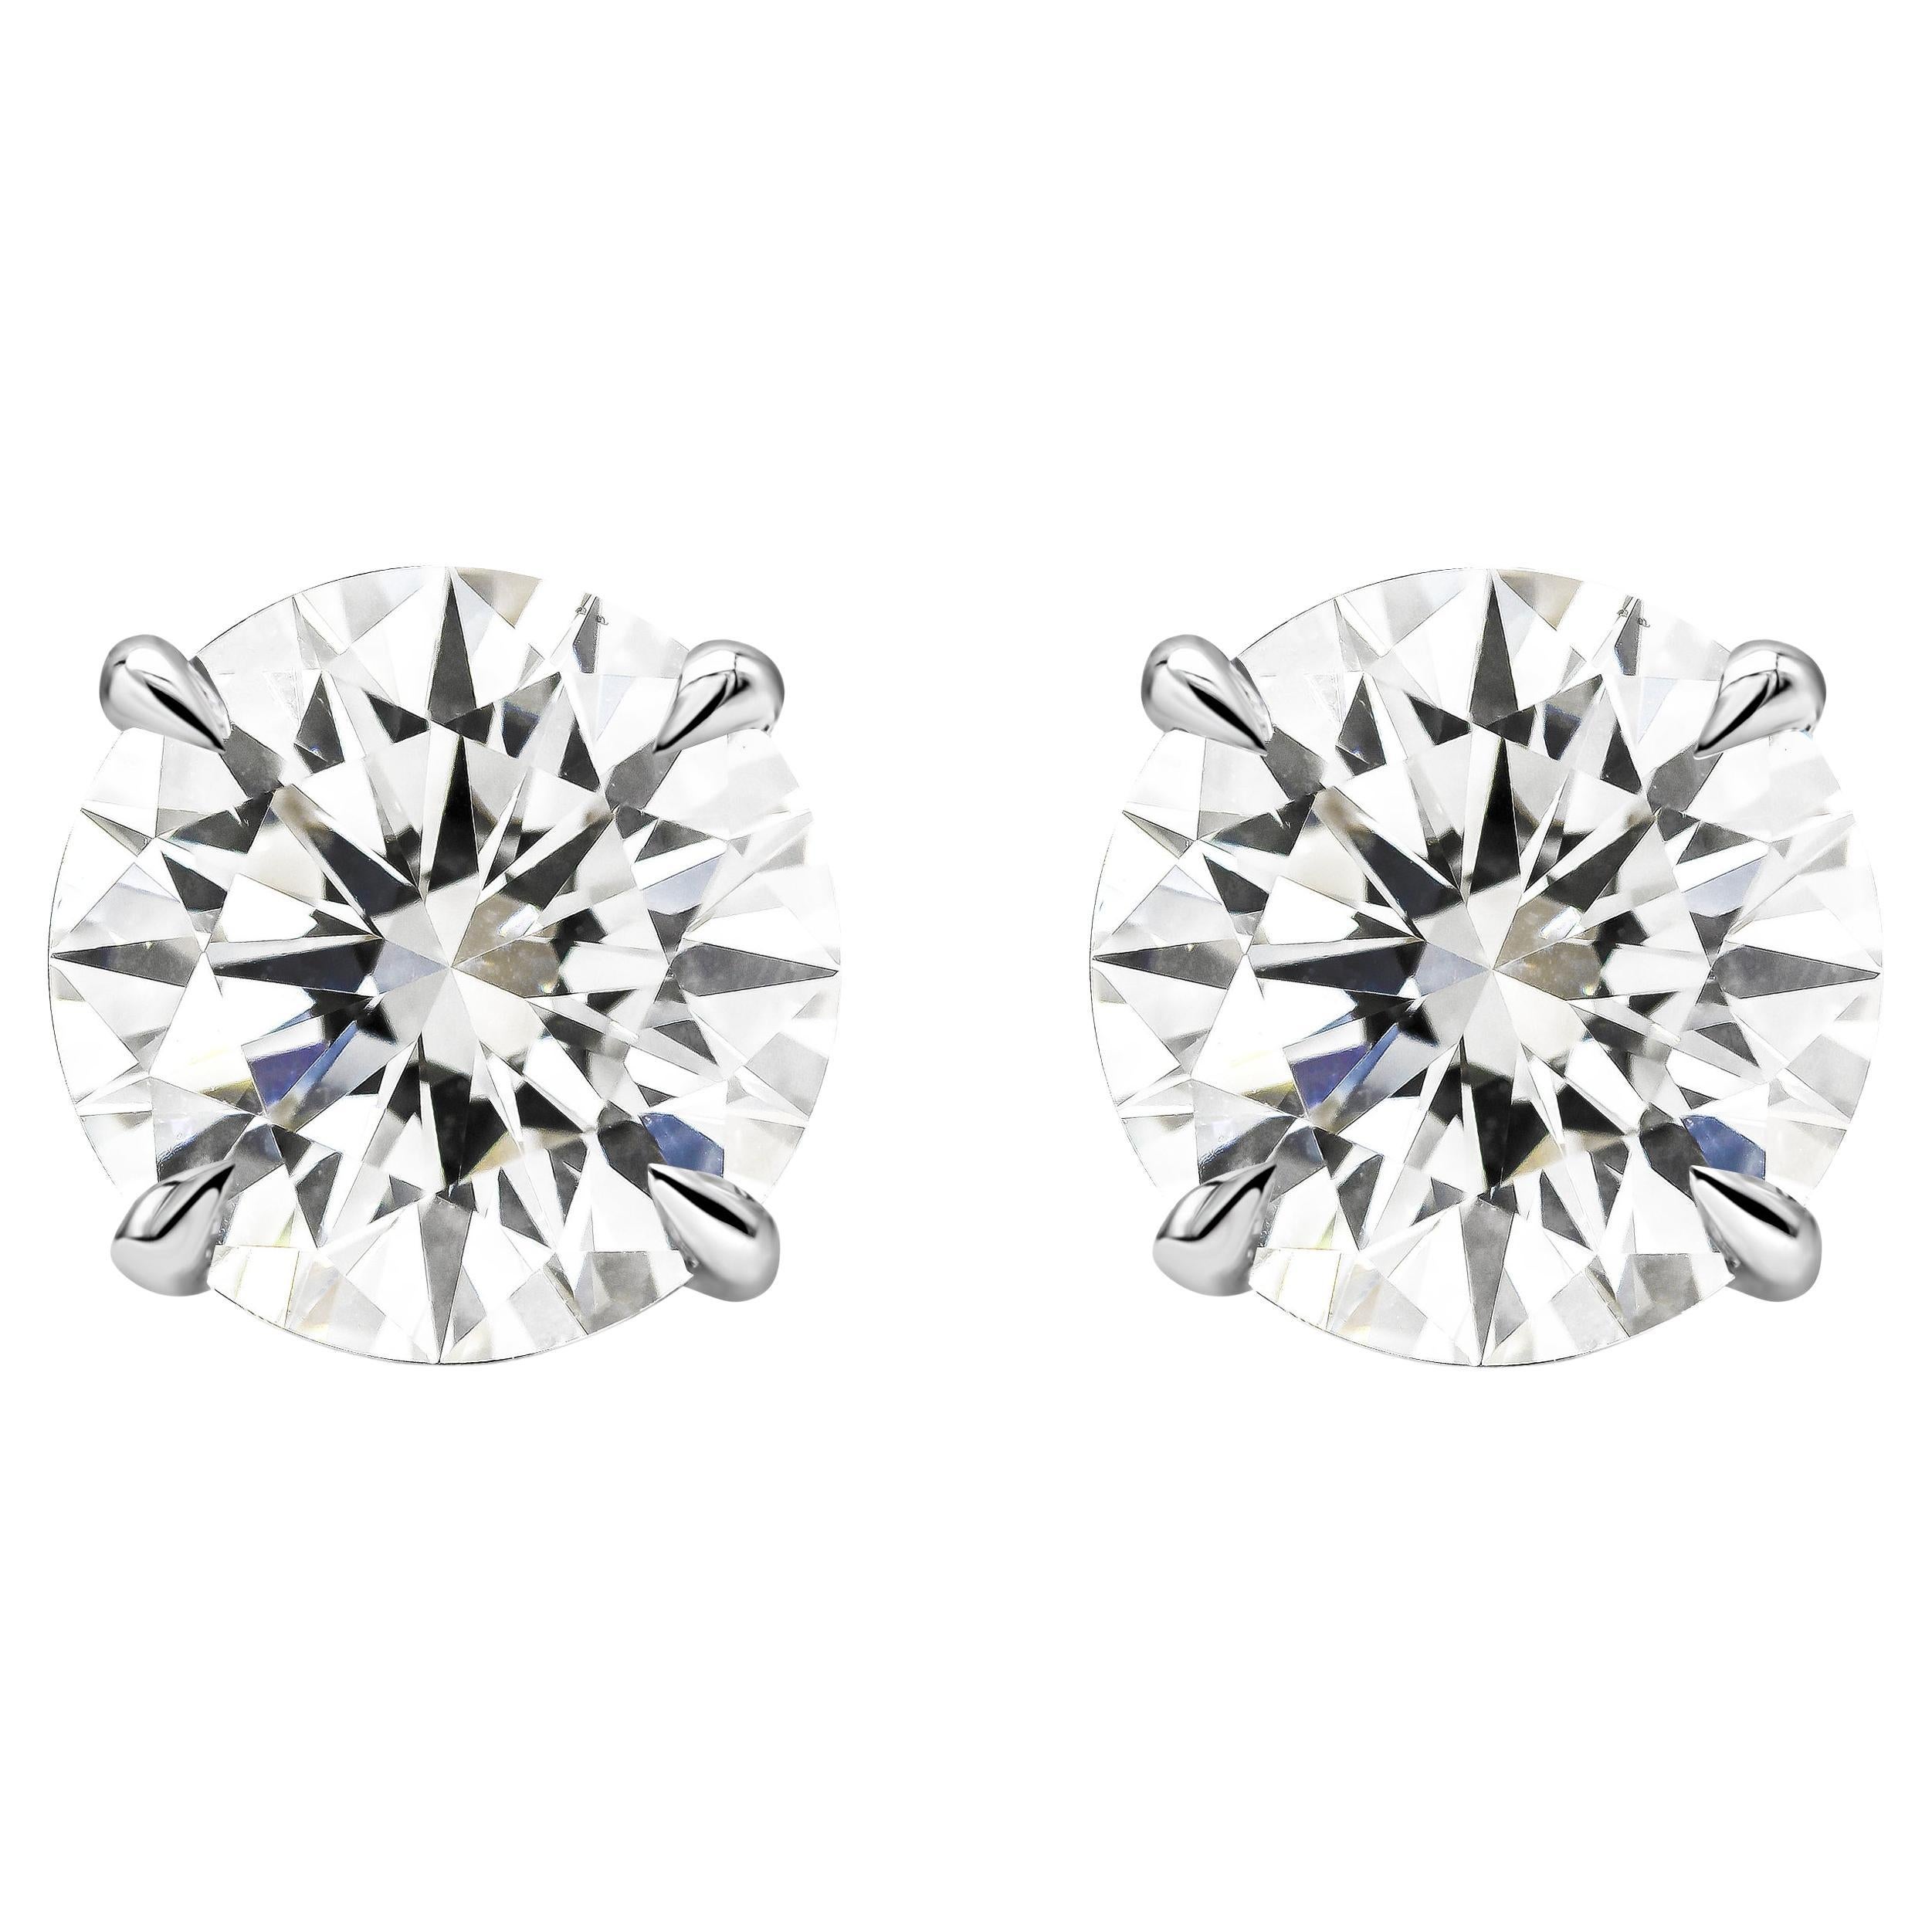 Roman Malakov 1.17 Carat Total Round Diamond Stud Earrings